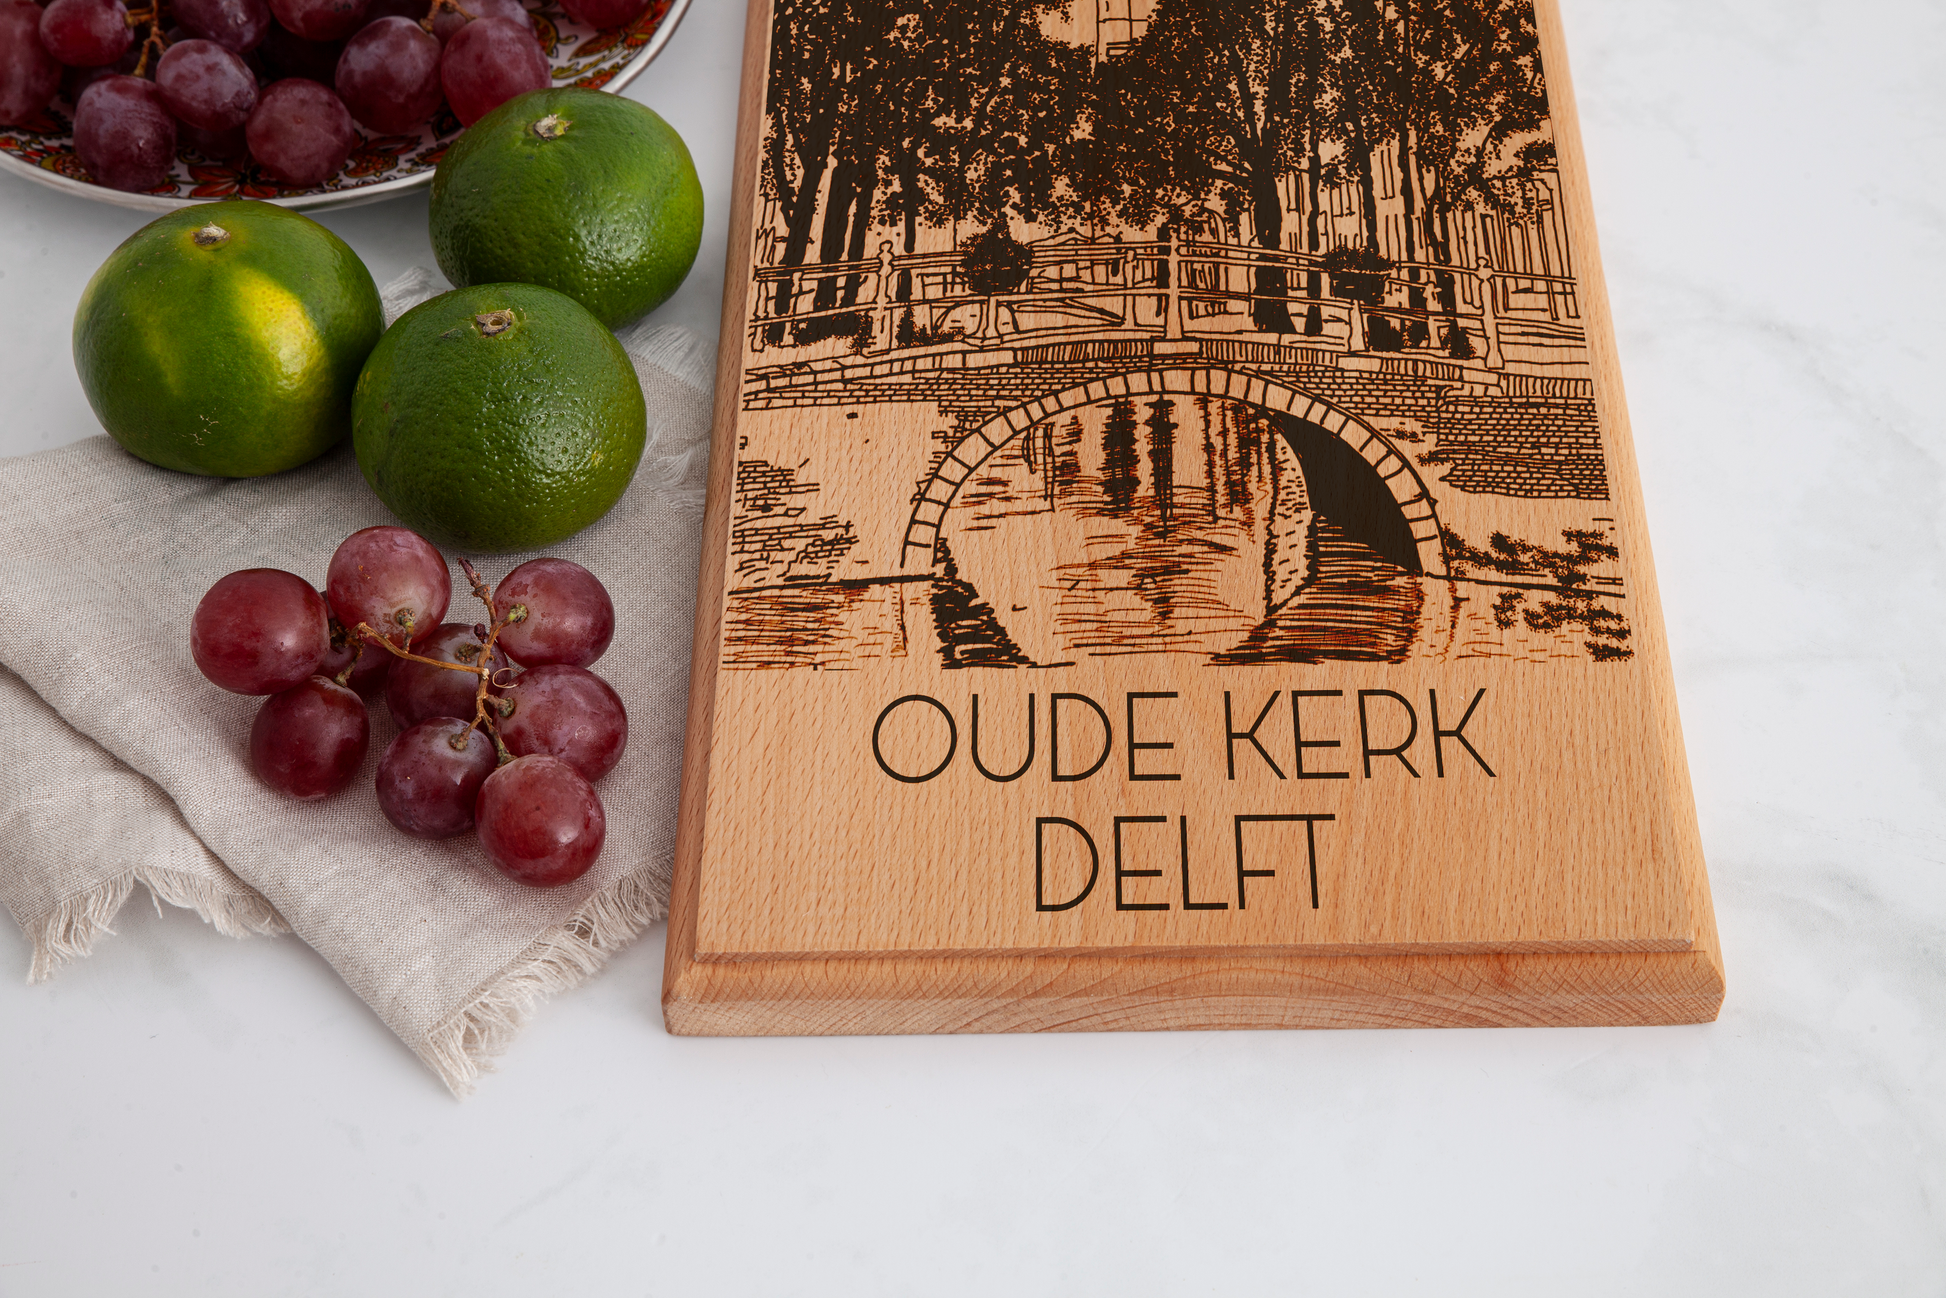 Delft, Oude Kerk, medium serving board, wood grain